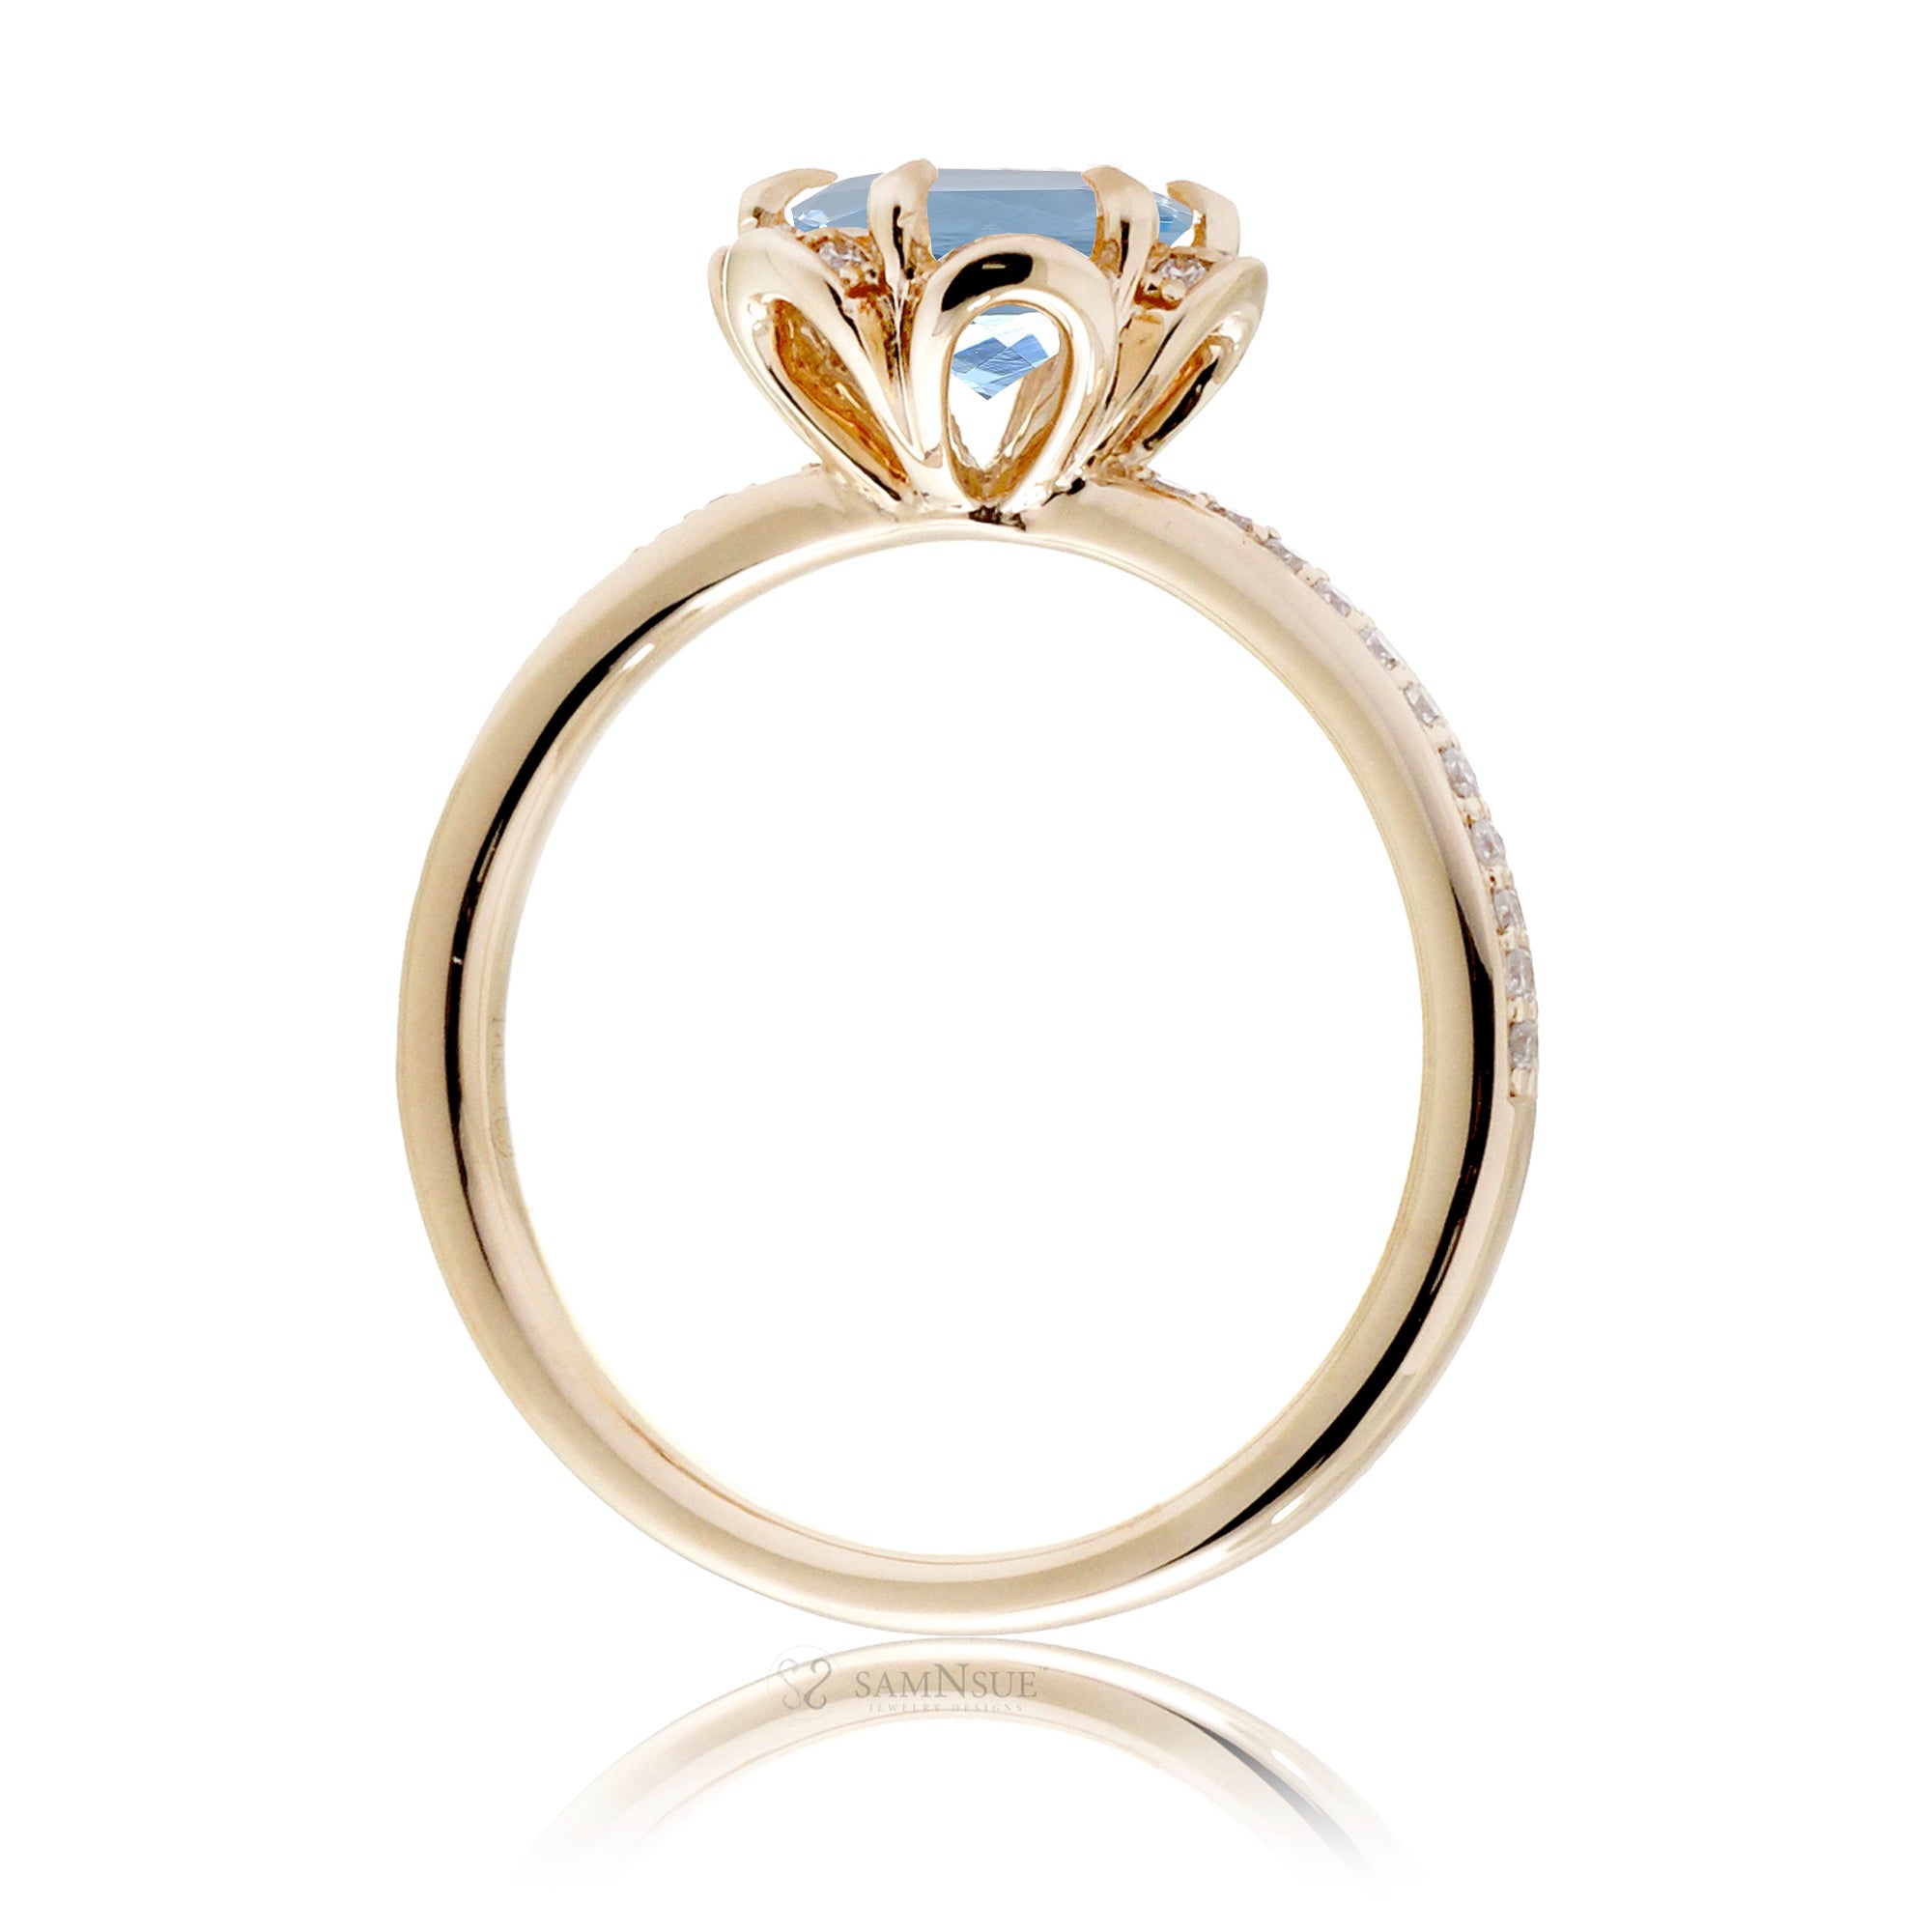 Aquamarine ring March birthstone diamond accent yellow gold